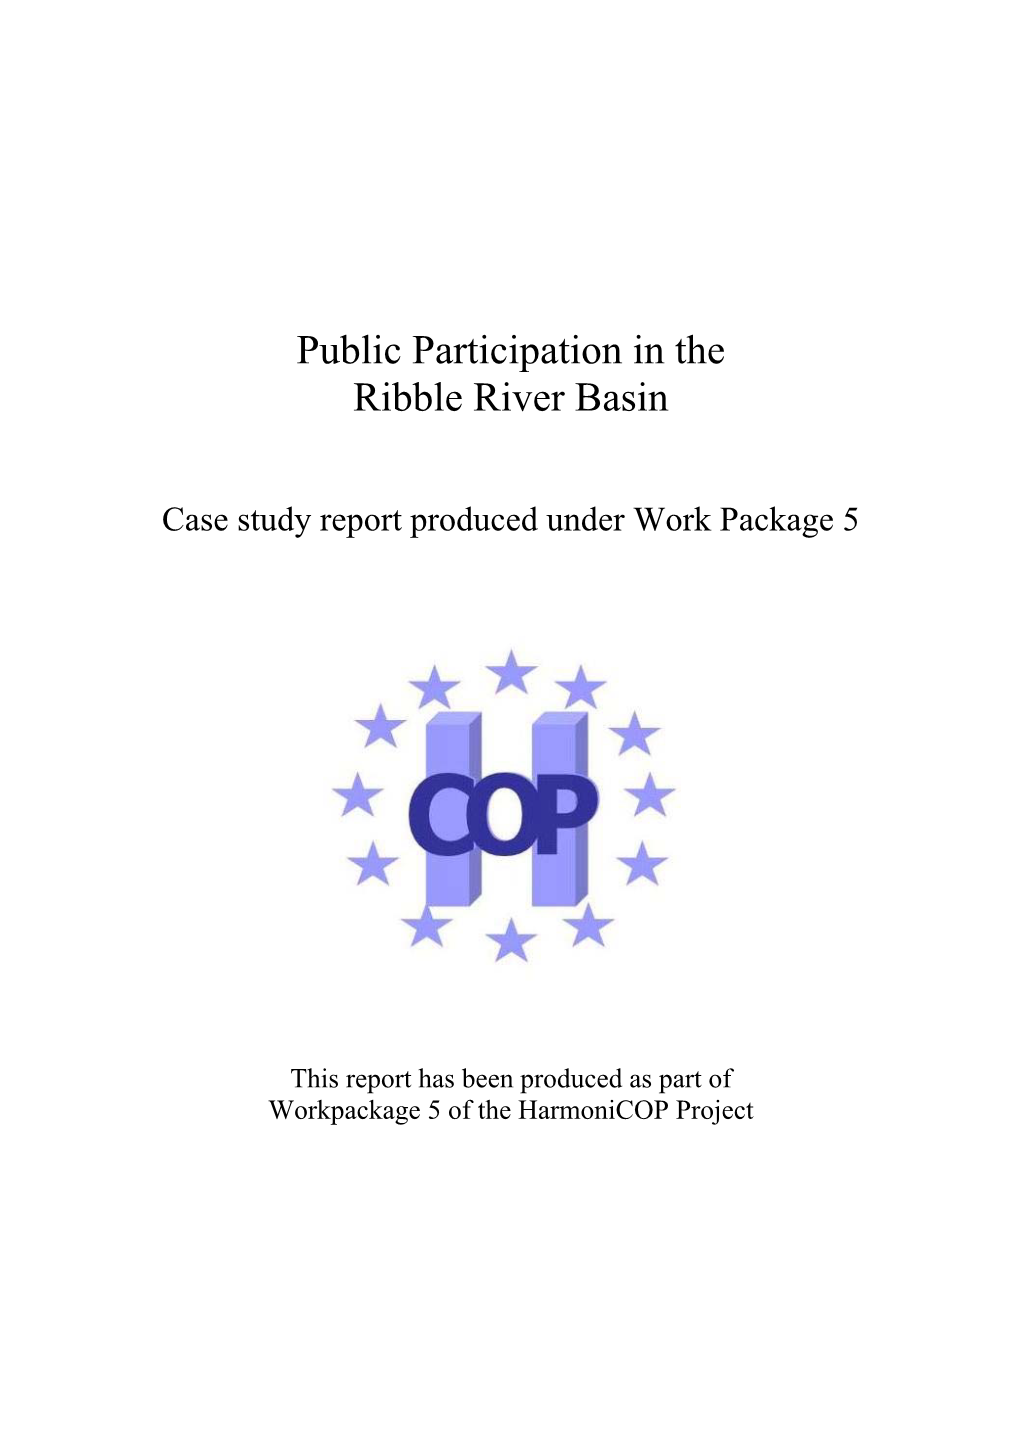 Public Participation in the Ribble River Basin